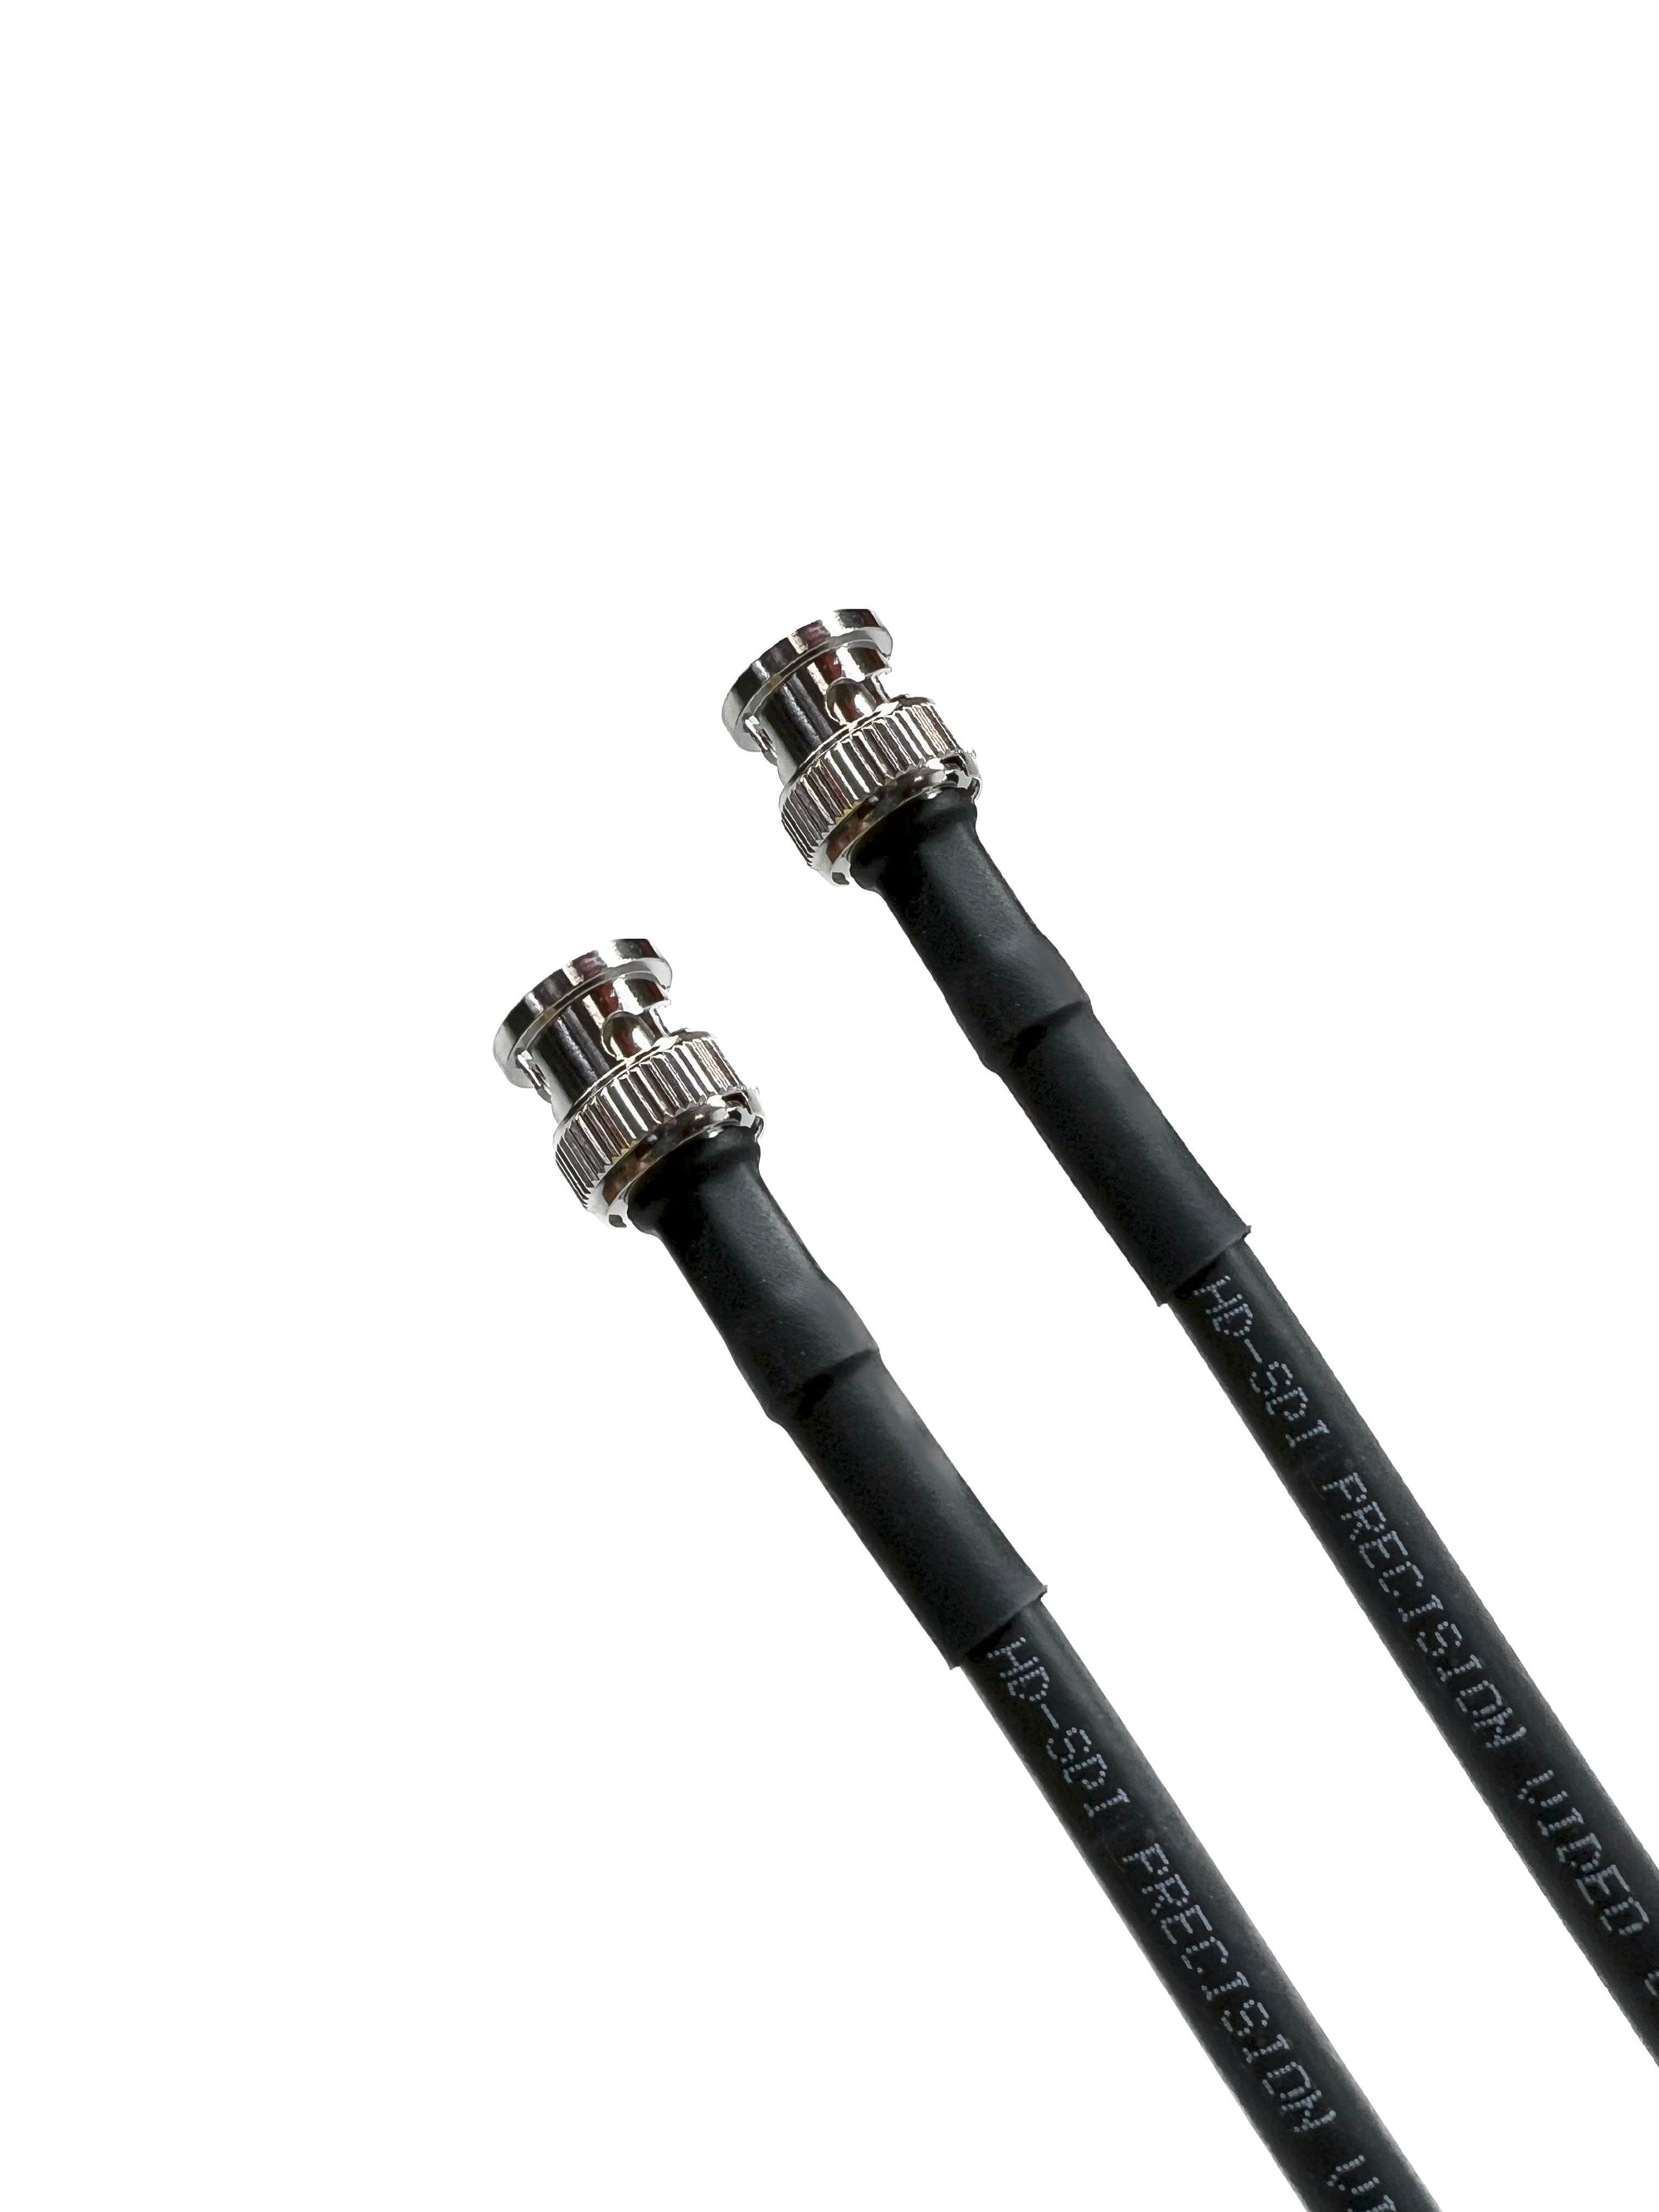 Belden 4694P Plenum 12G-SDI 4K Ultra-High-Definition BNC Video Cables